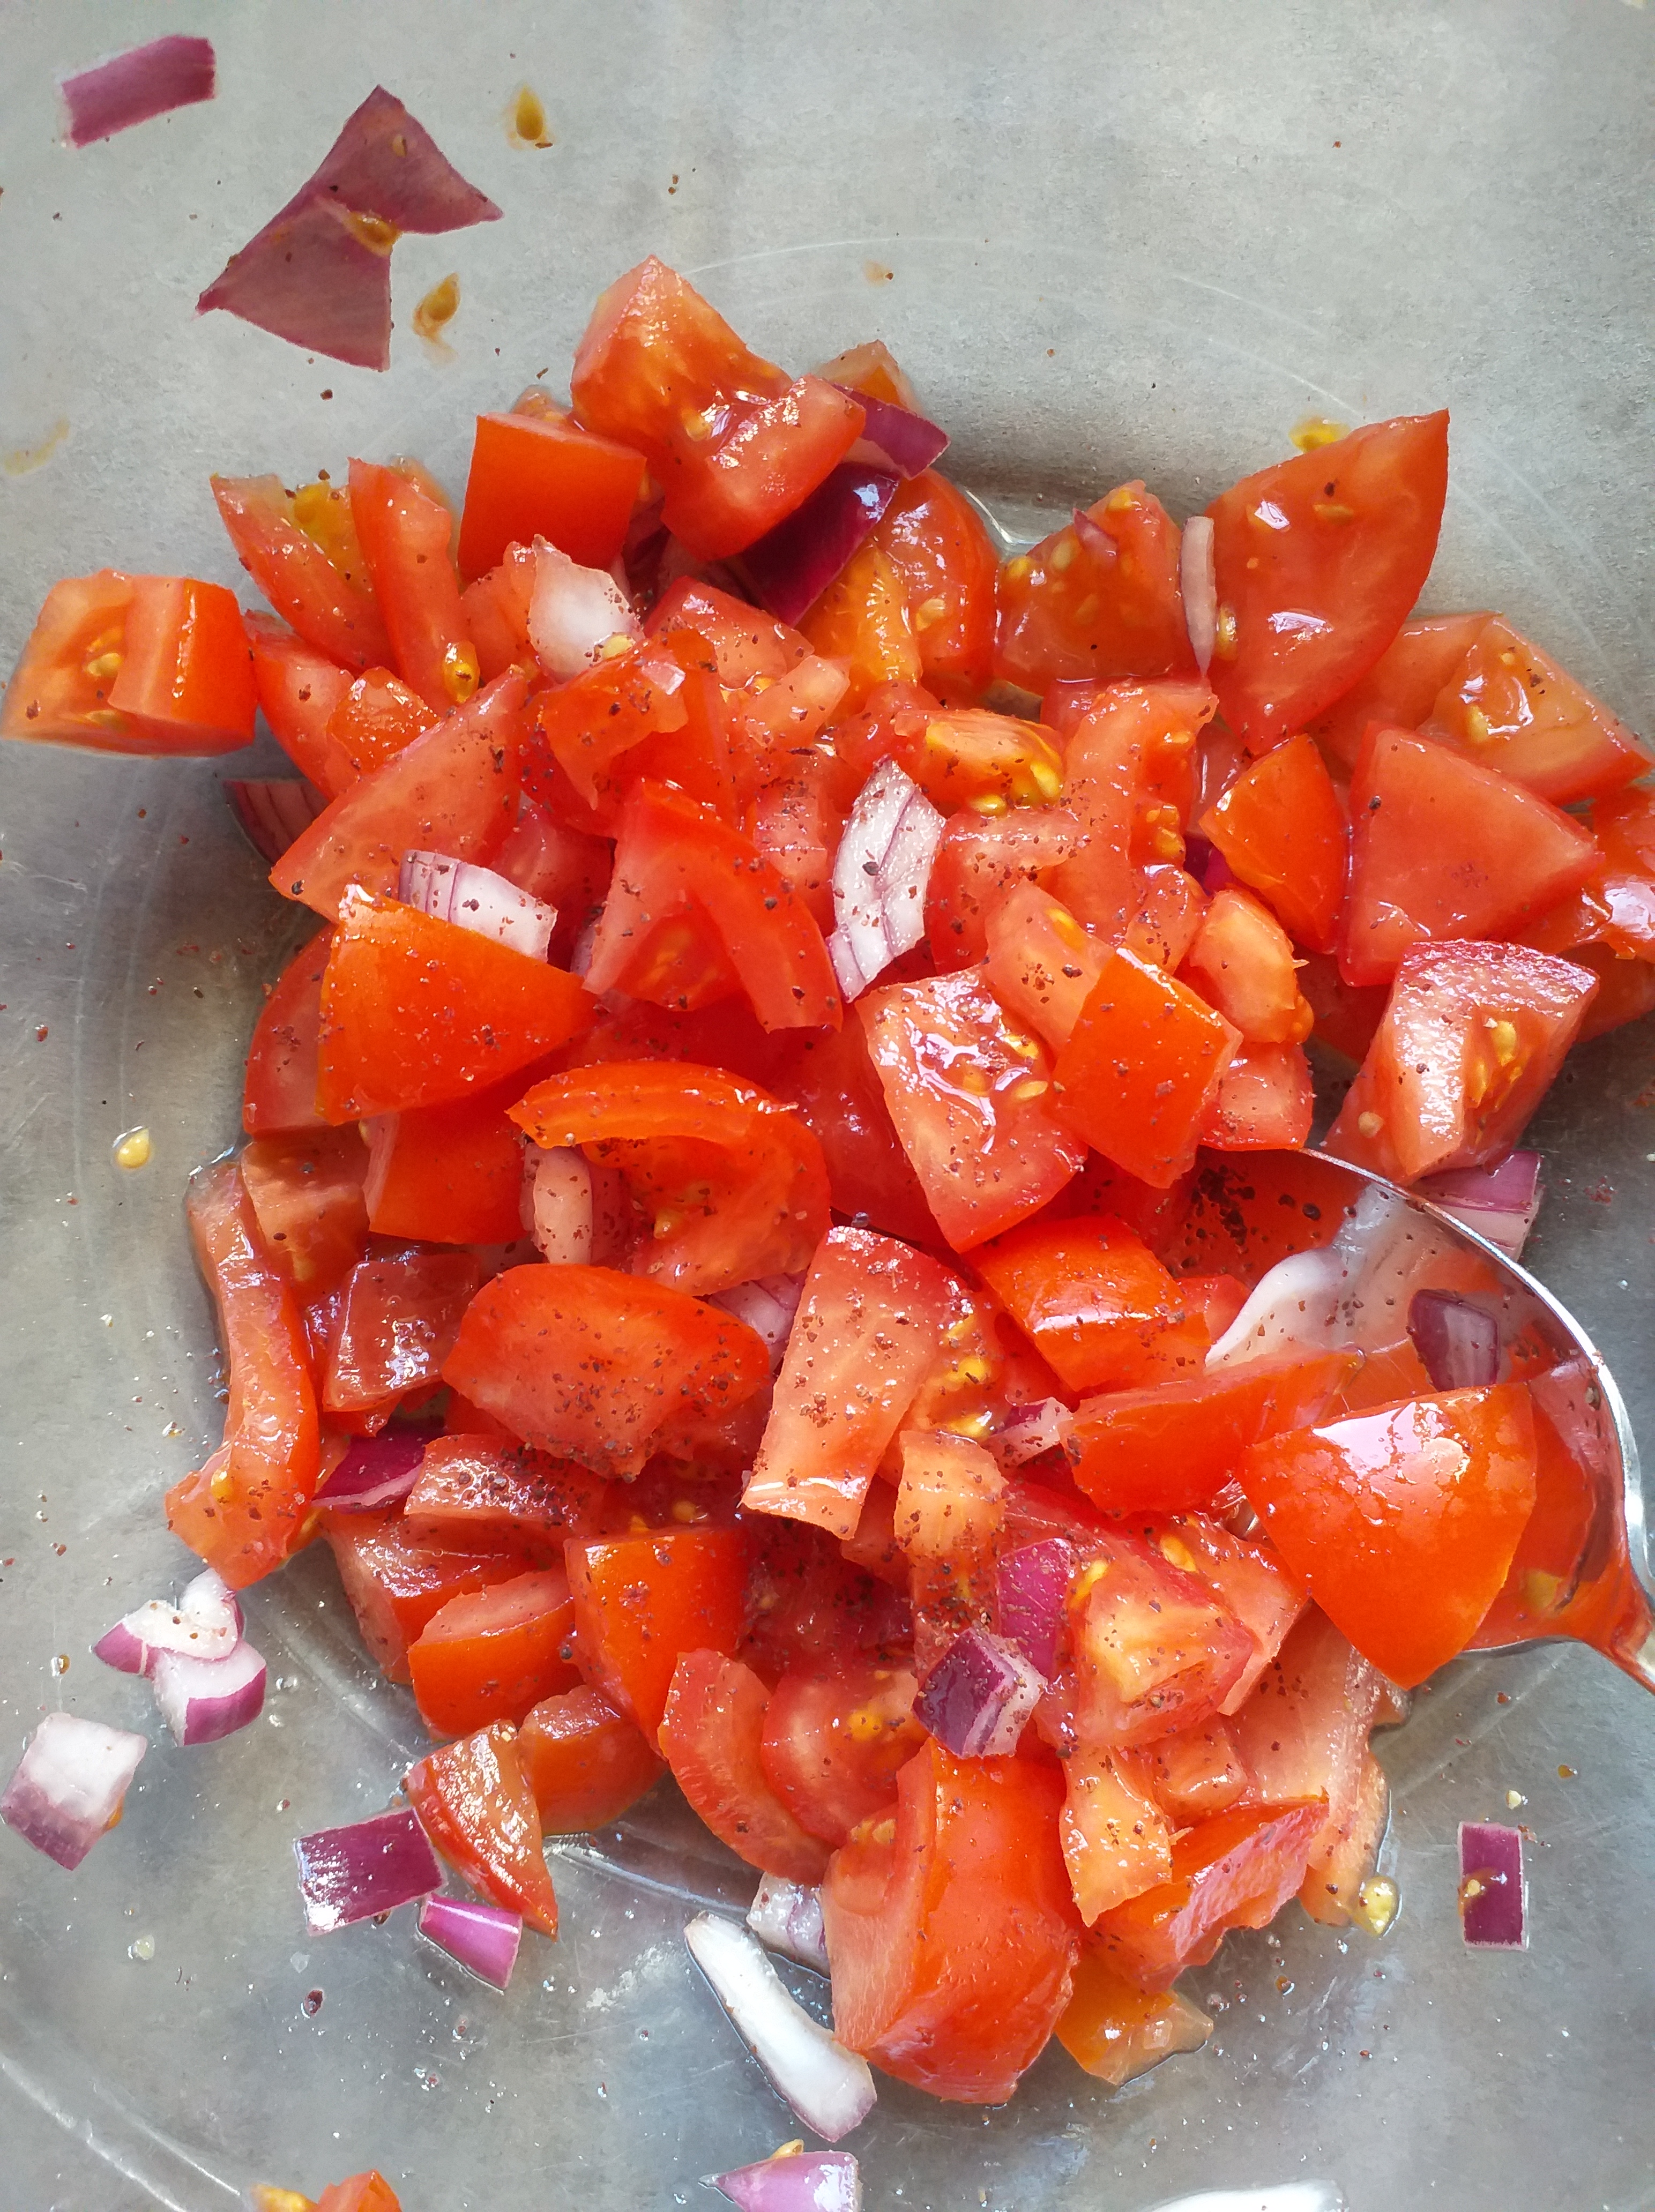 Tomato and sumac salad